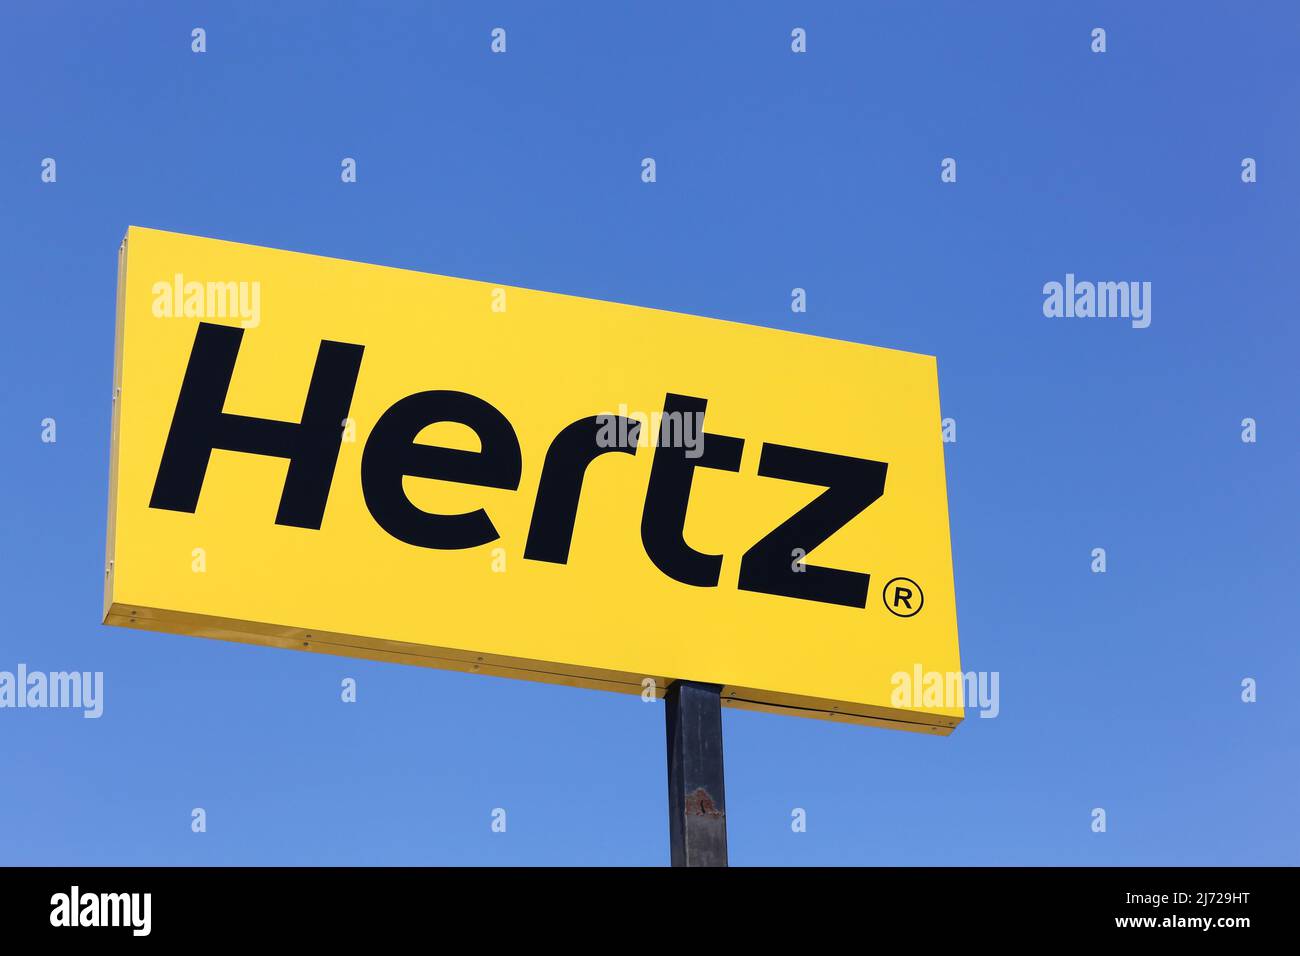 Saint Priest, France - June 18, 2017: Hertz logo on a panel. Hertz is an American car rental company with international locations Stock Photo